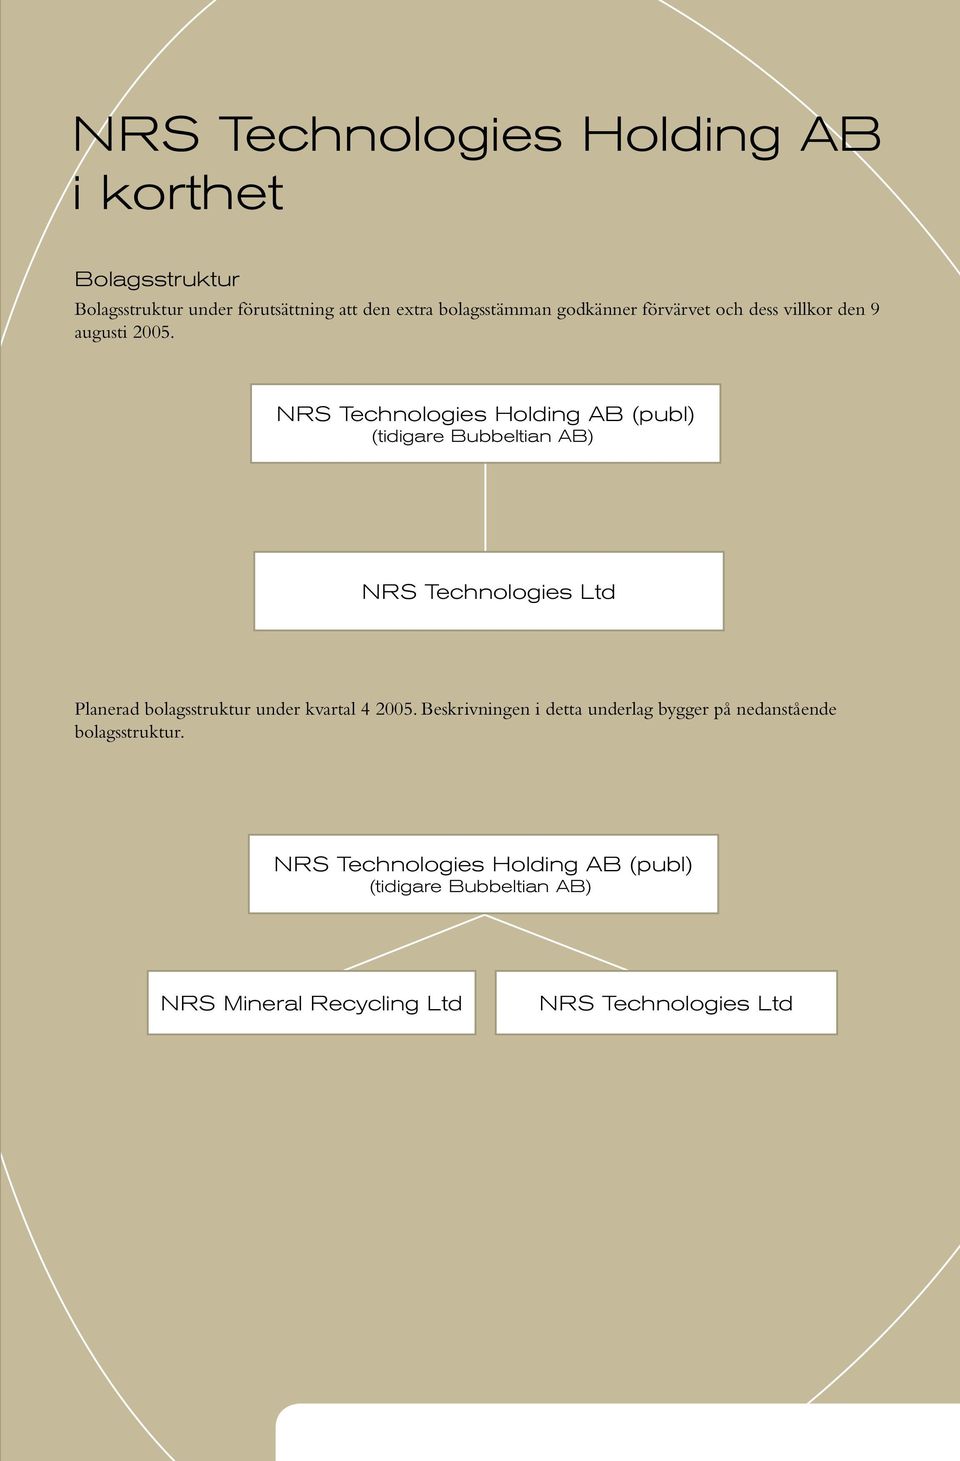 NRS Technologies Holding AB (publ) (tidigare Bubbeltian AB)) NRS Technologies Ltd Planerad bolagsstruktur under kvartal